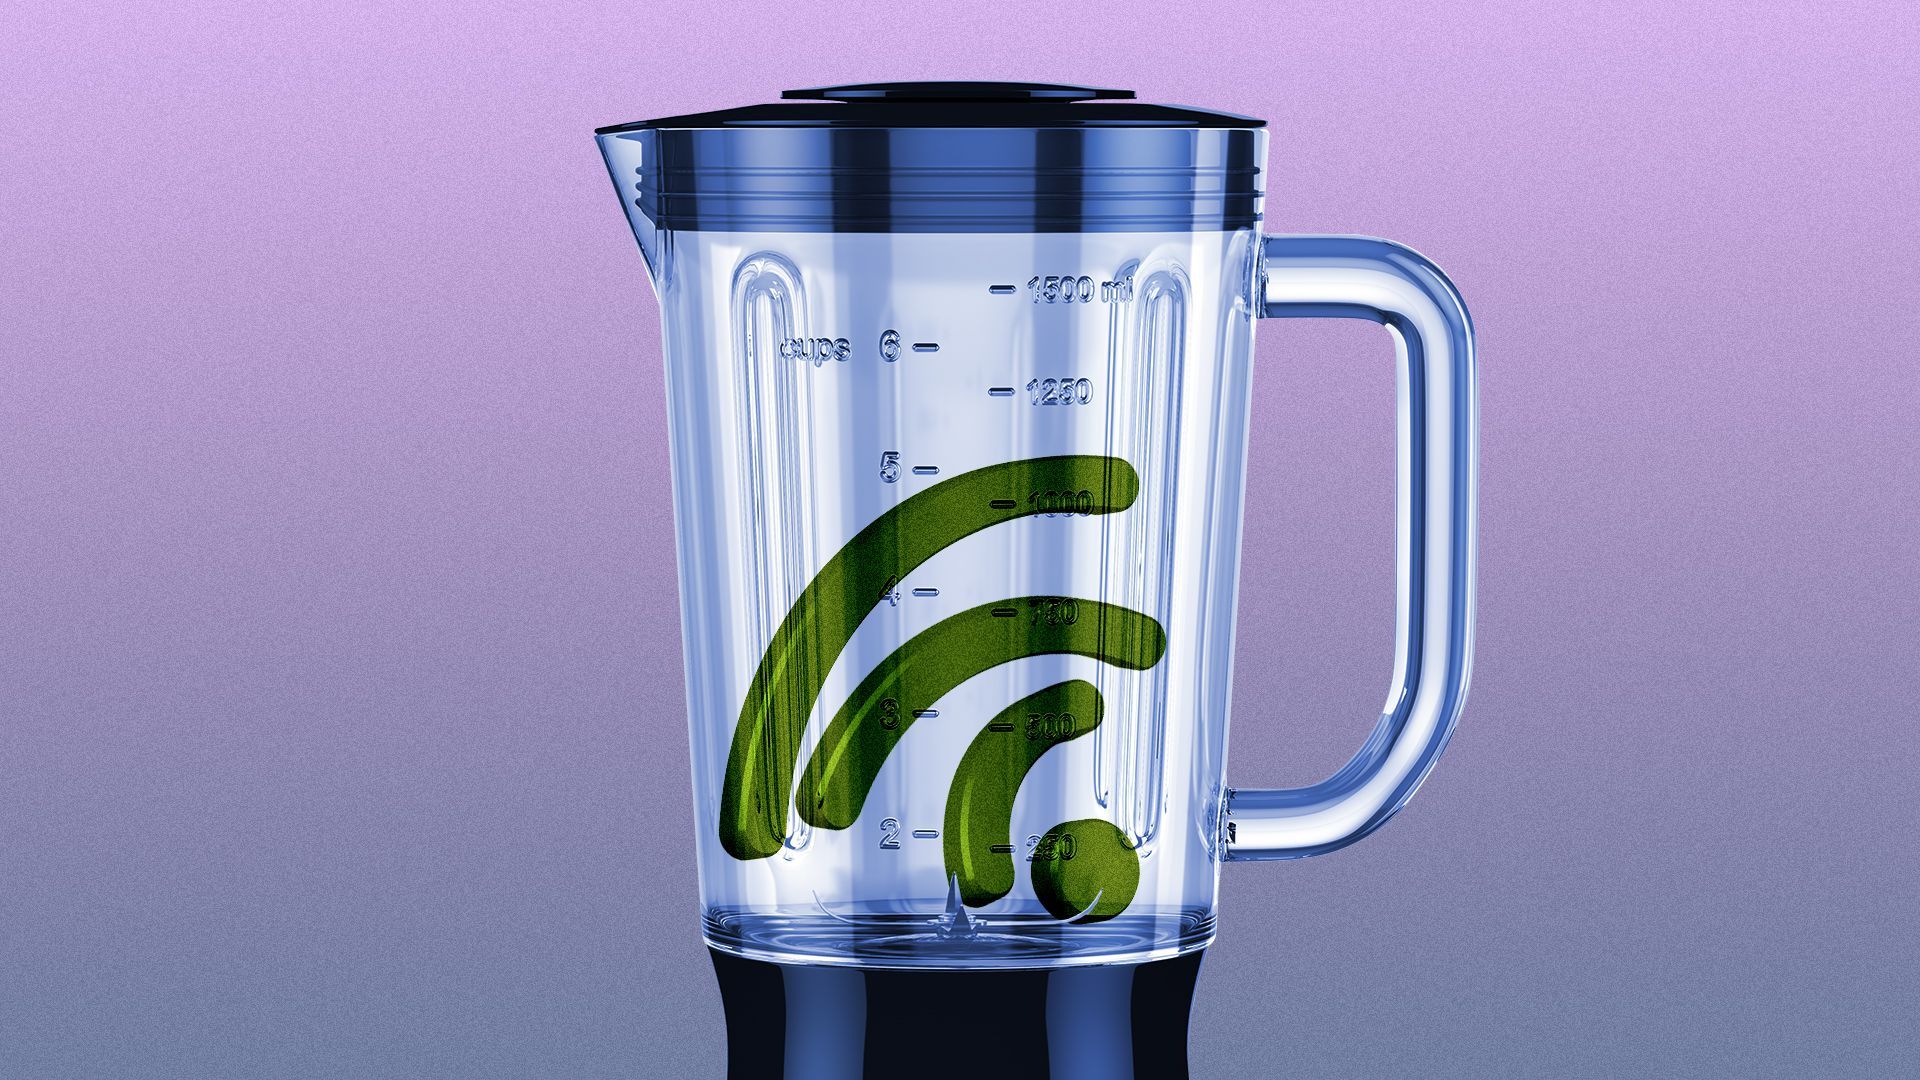 Illustration of a wifi logo in a blender